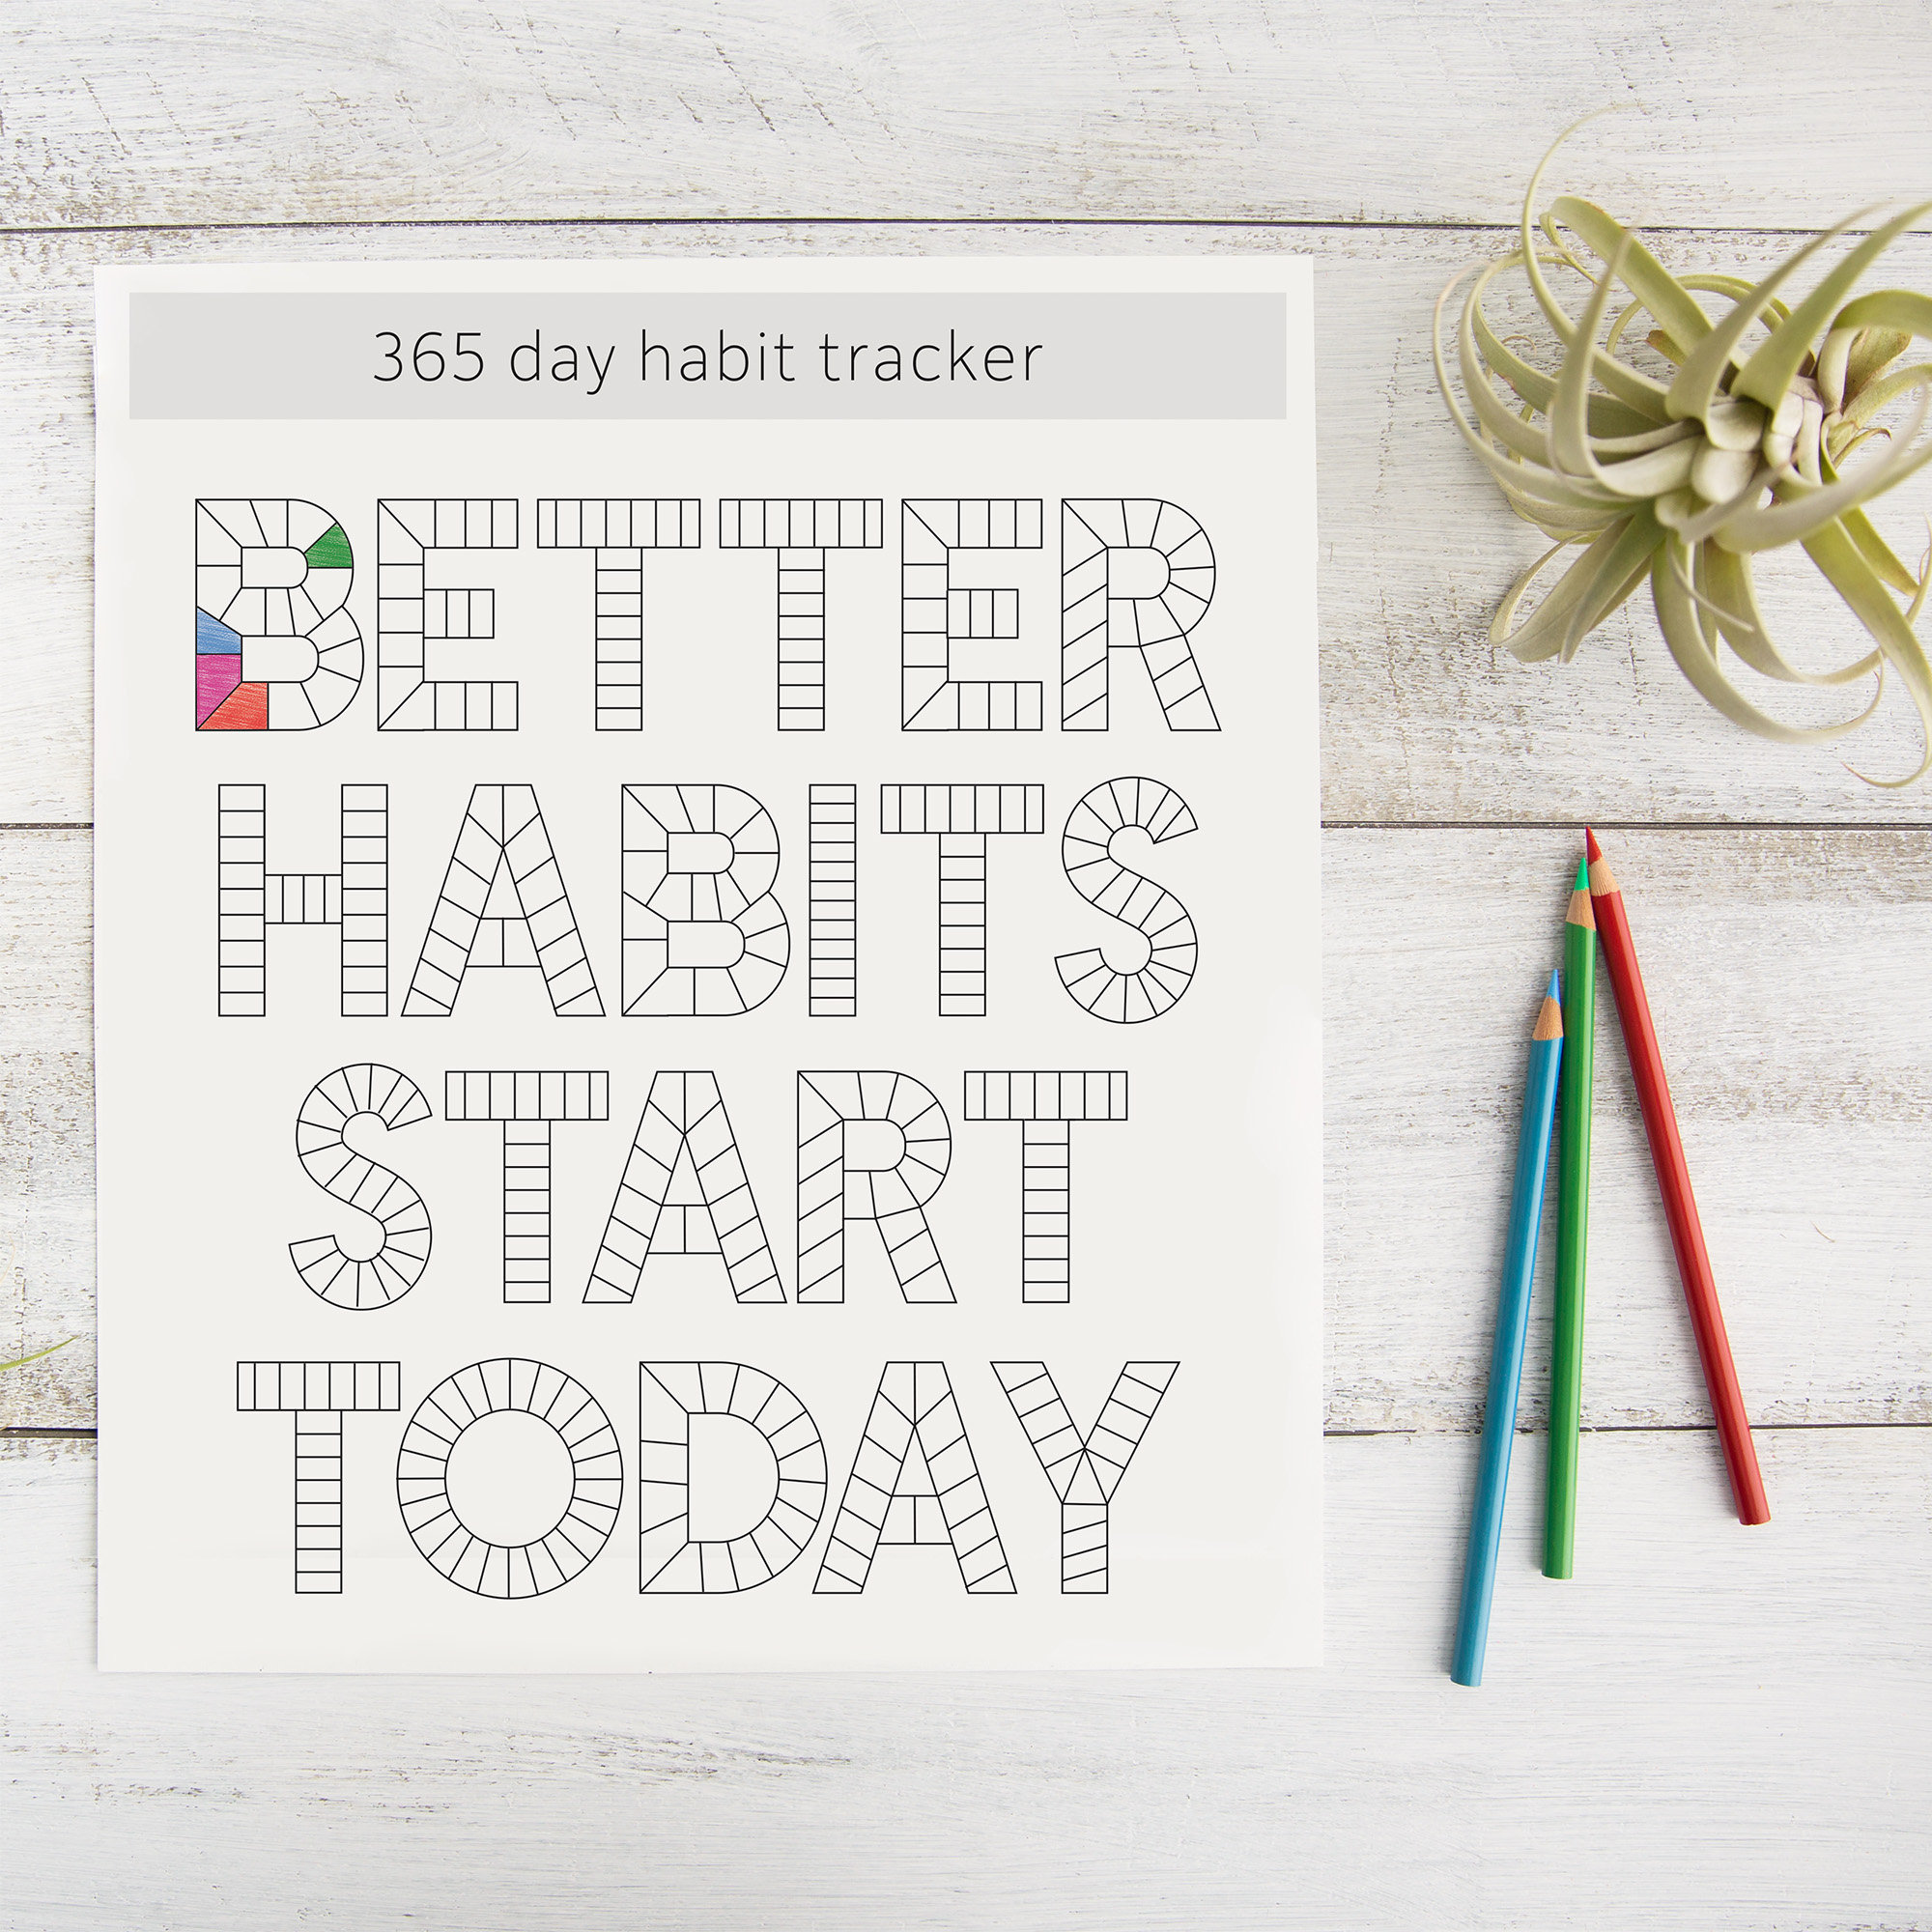 Honeycomb Habit Tracker Stamp, 30 Day Challenge Planner Rubber